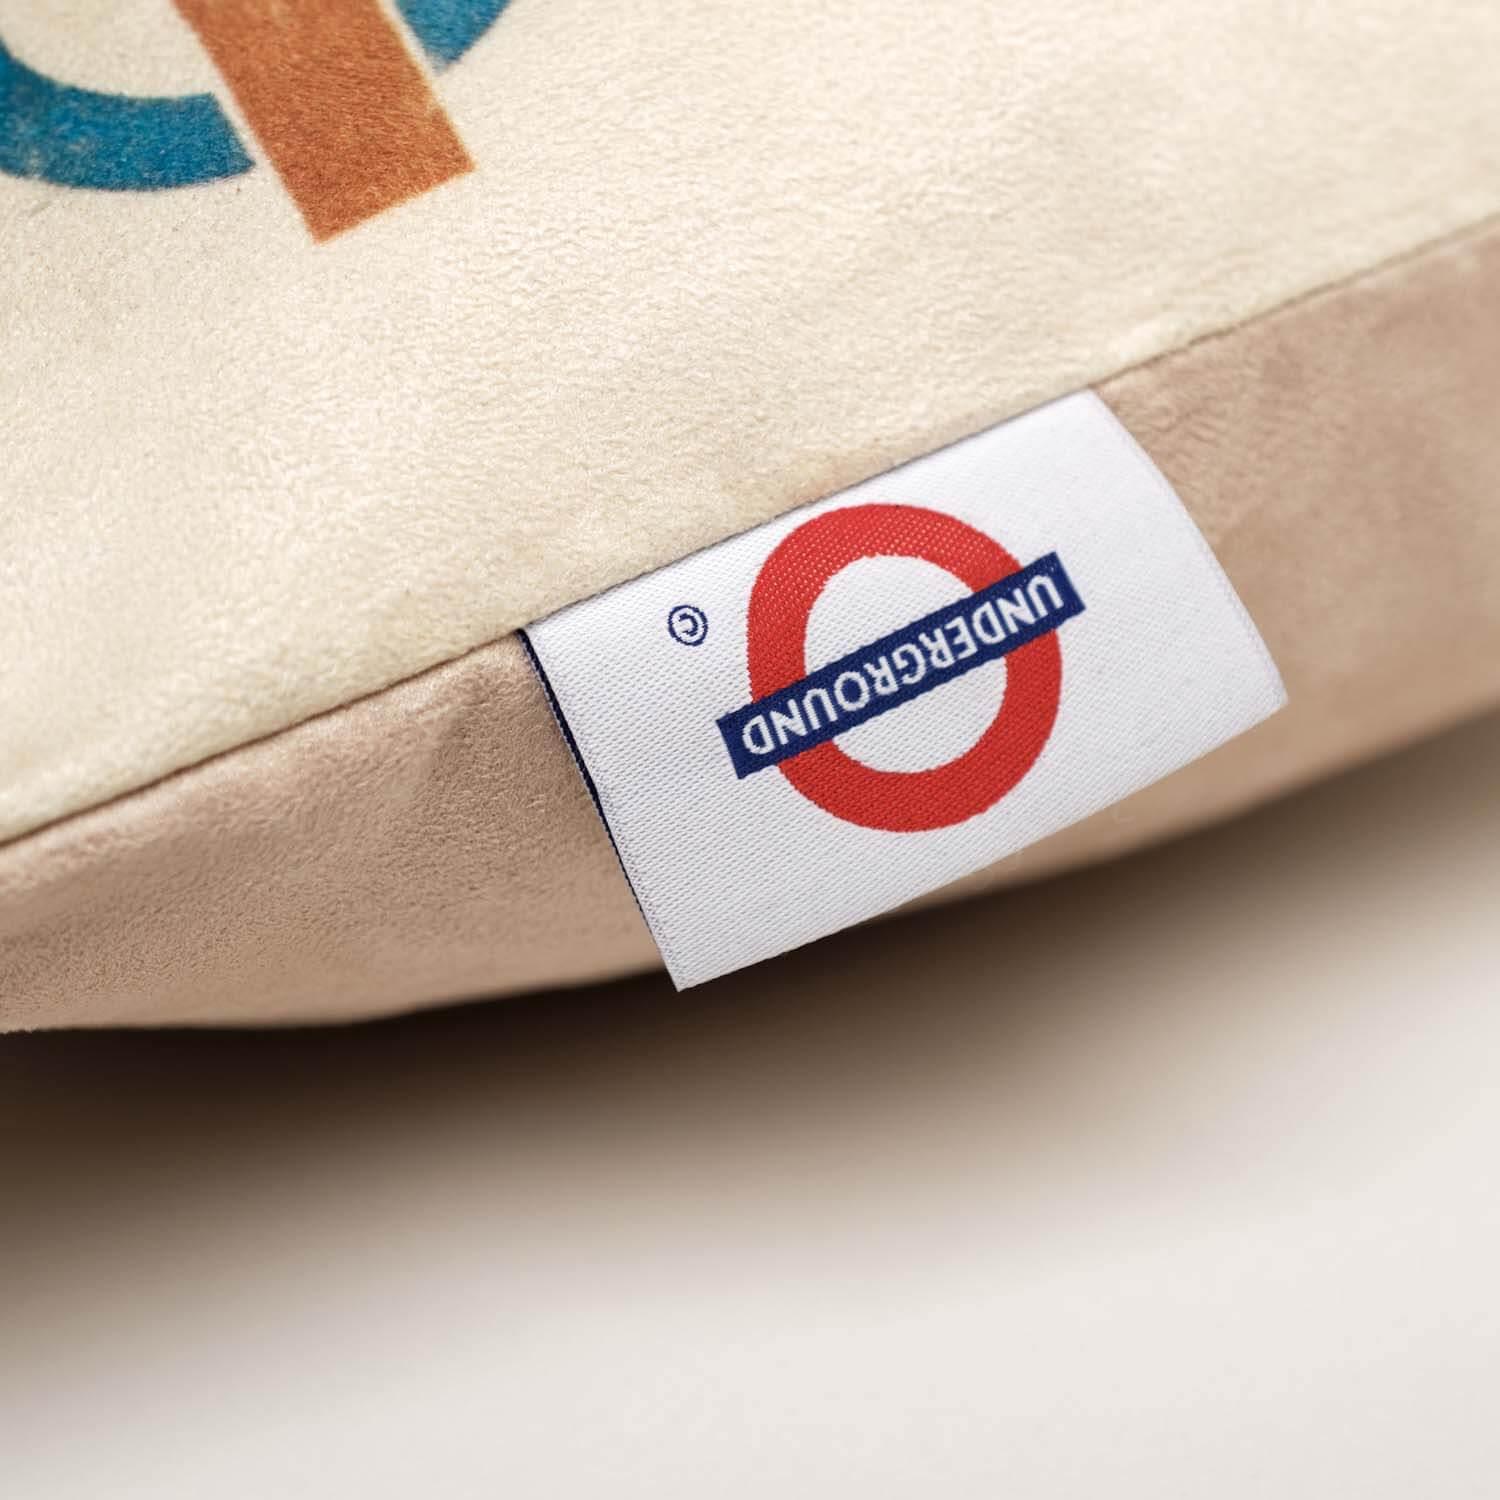 Wimbledon Lawn Tennis - London Transport Cushion - Handmade Cushions UK - WeLoveCushions